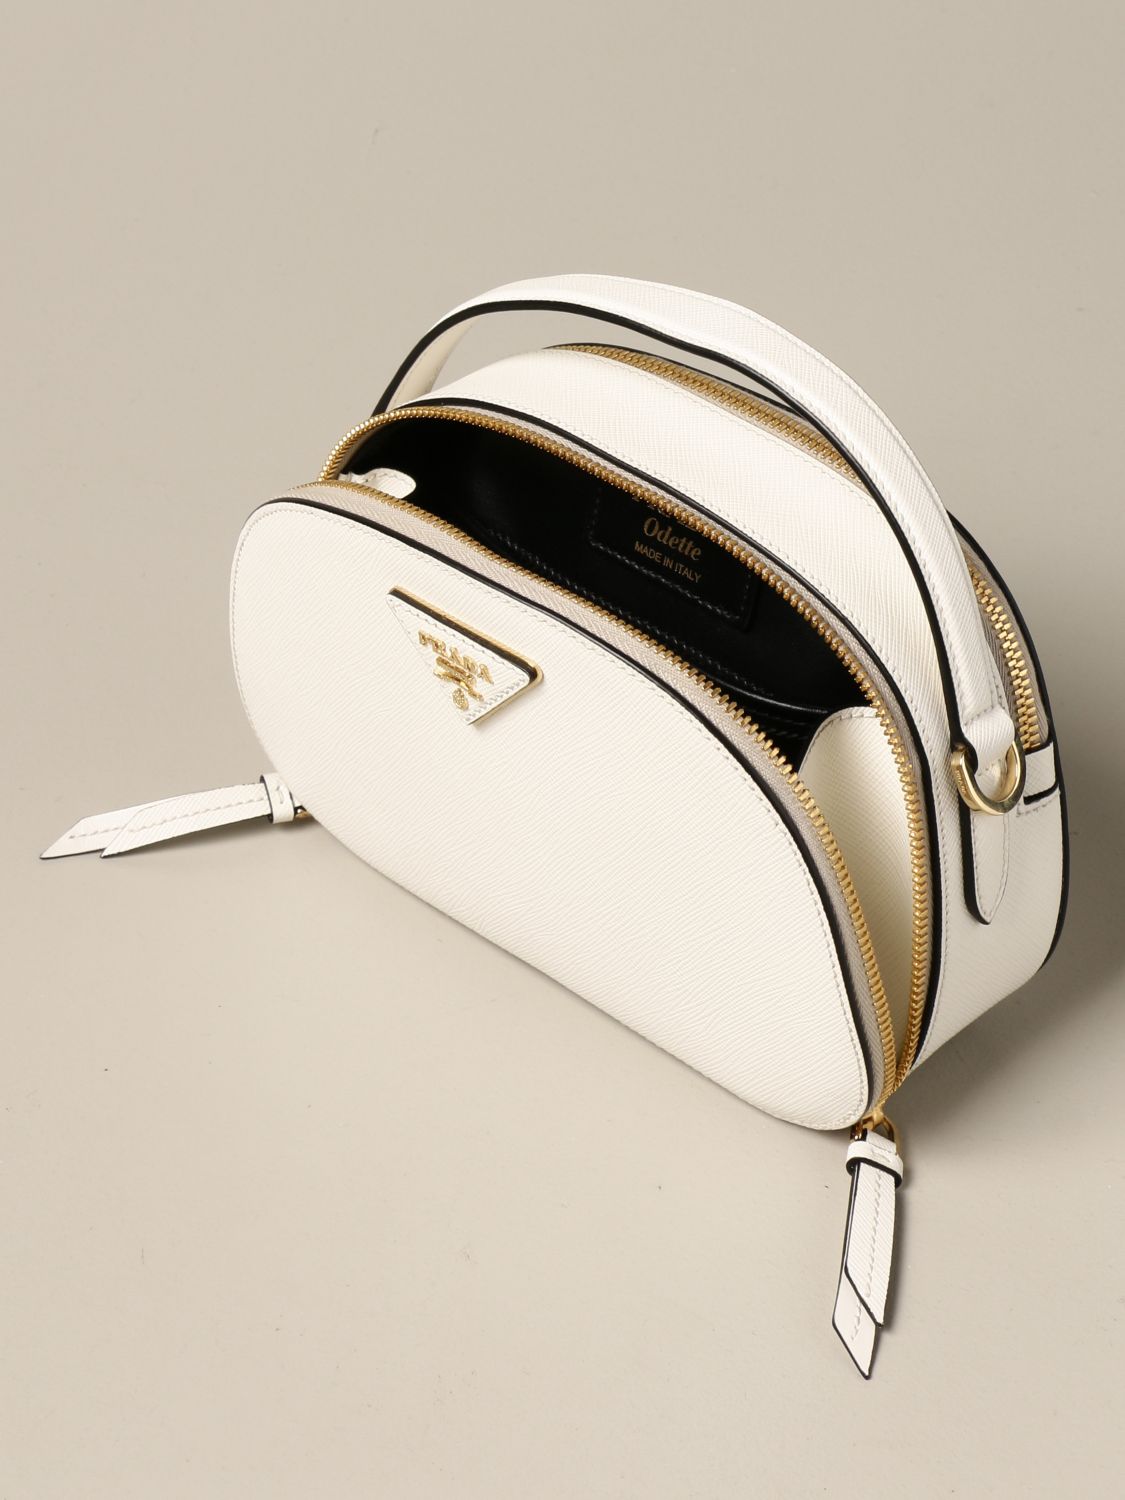 PRADA: Odette bag in saffiano leather - White  Prada mini bag 1BH123 NZV  online at